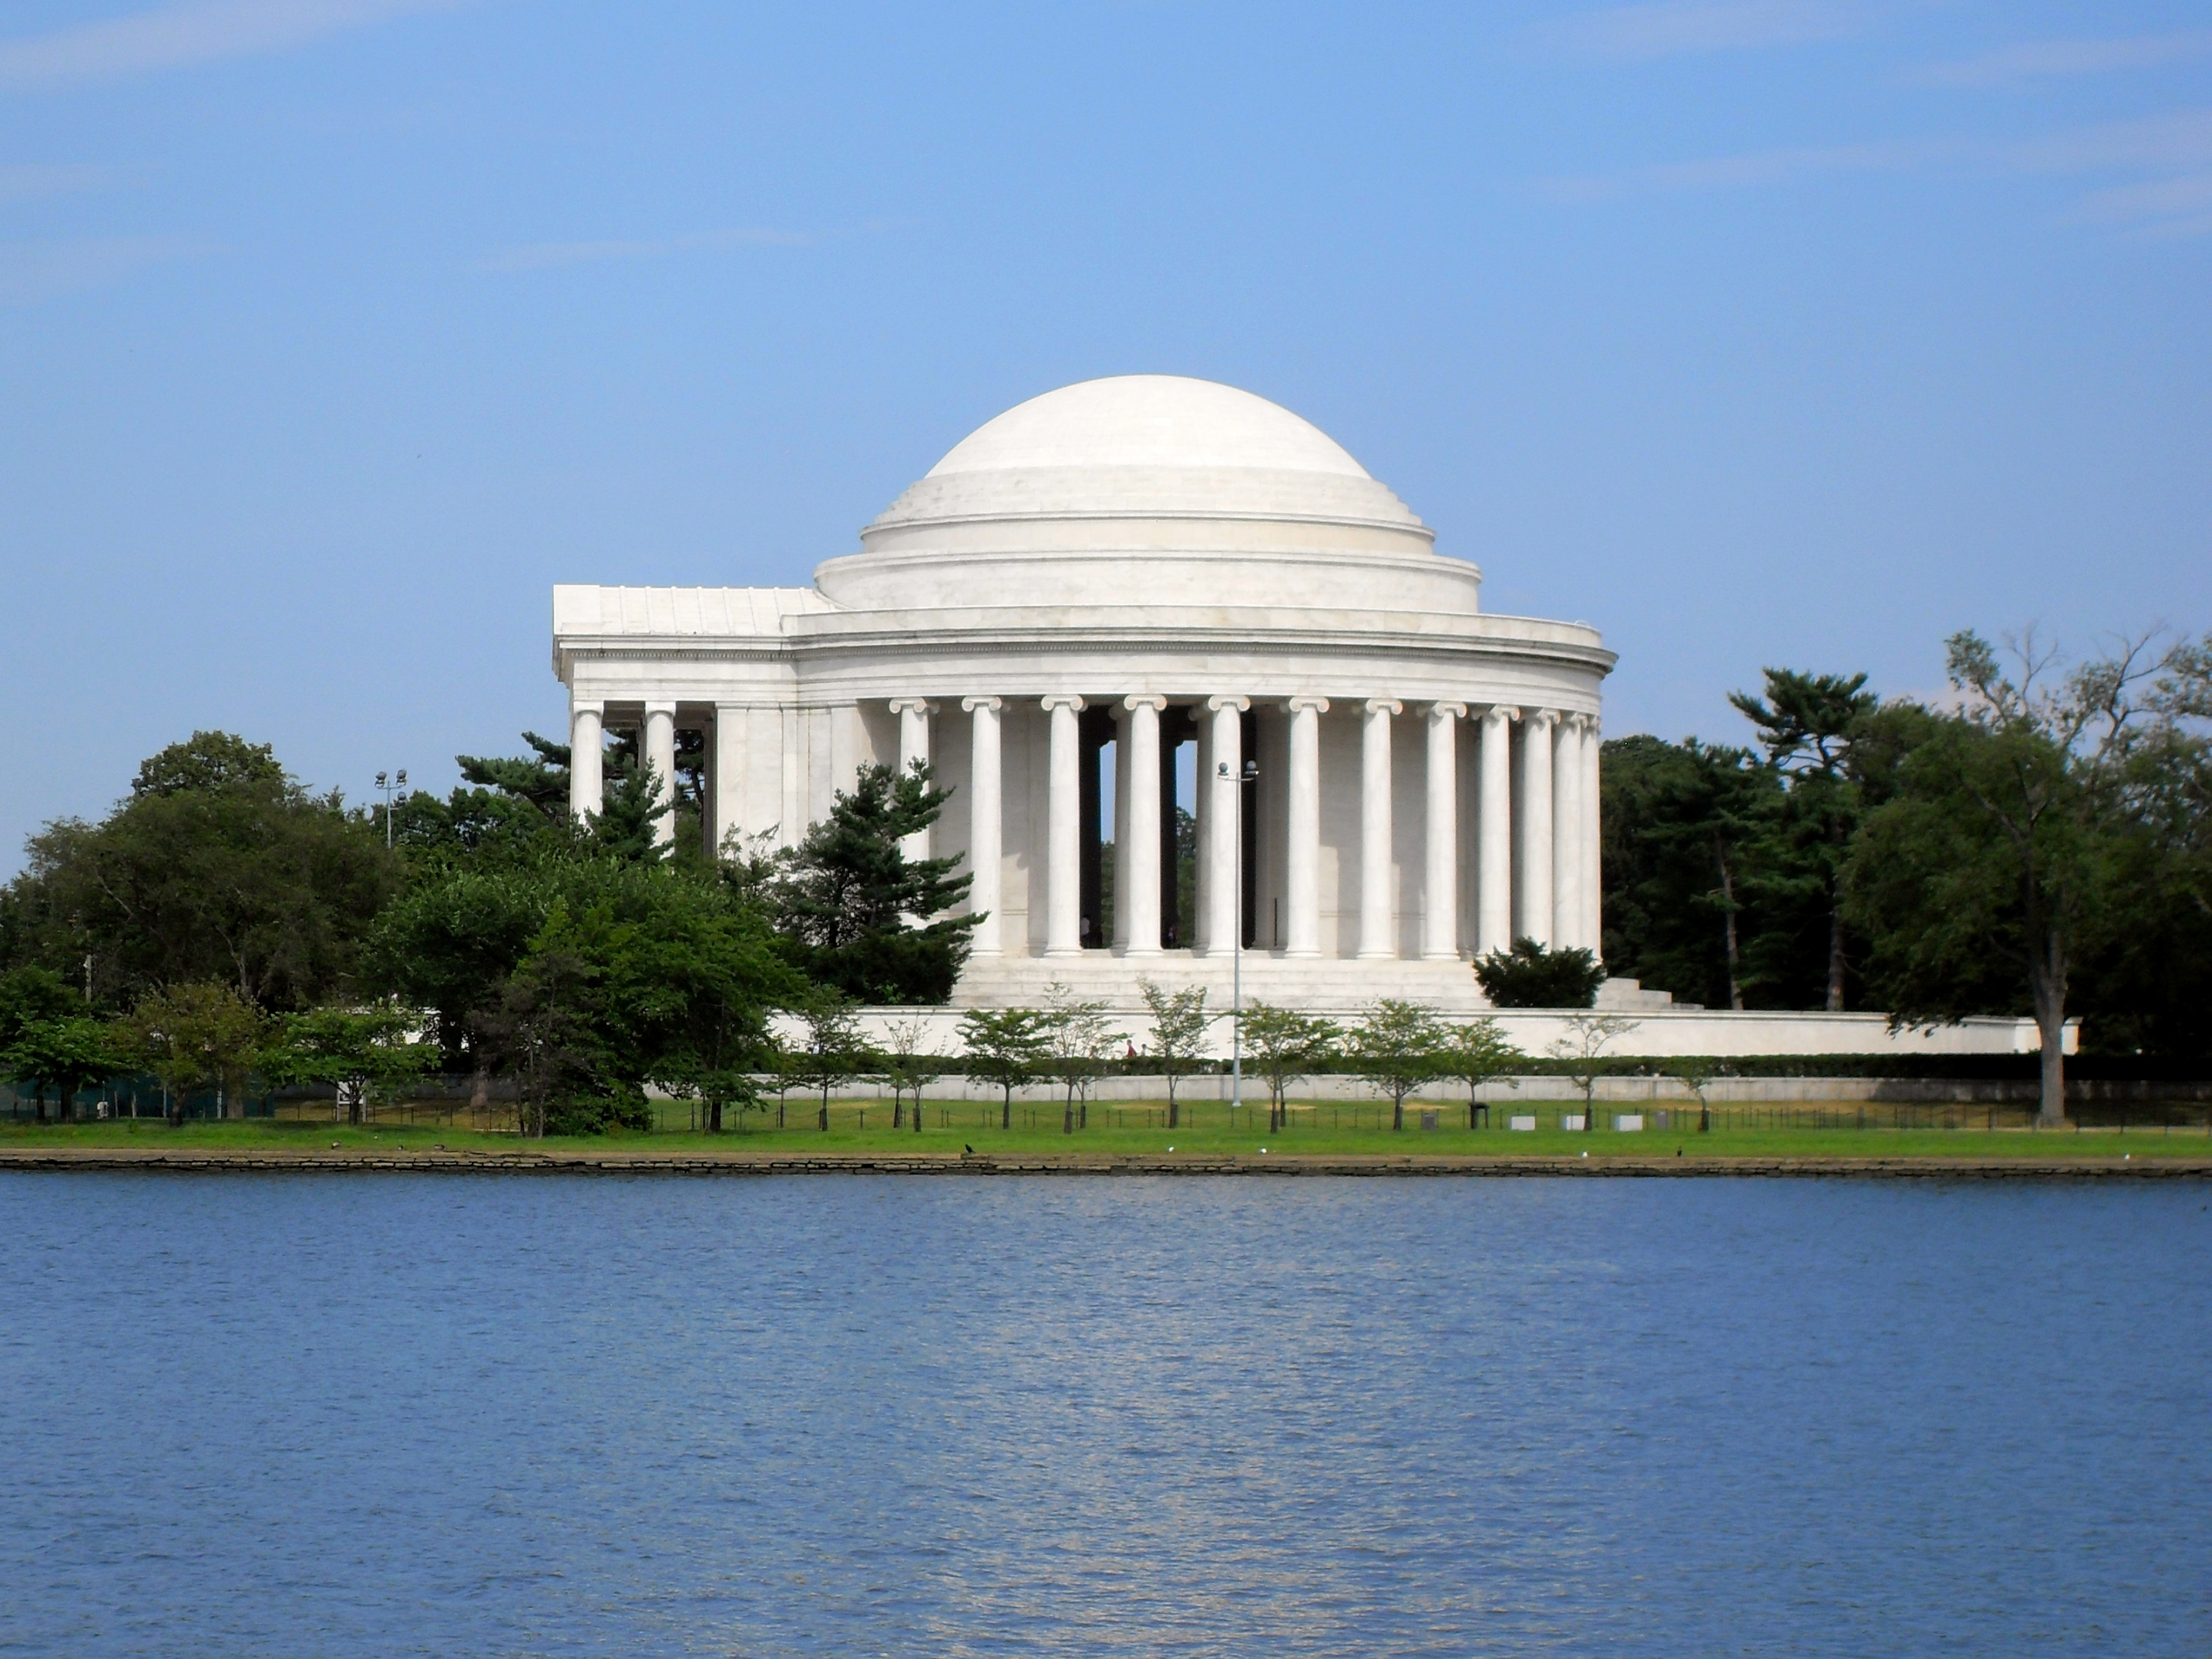 Jefferson Memorial – Quality Private Tours of Washington, D.C.